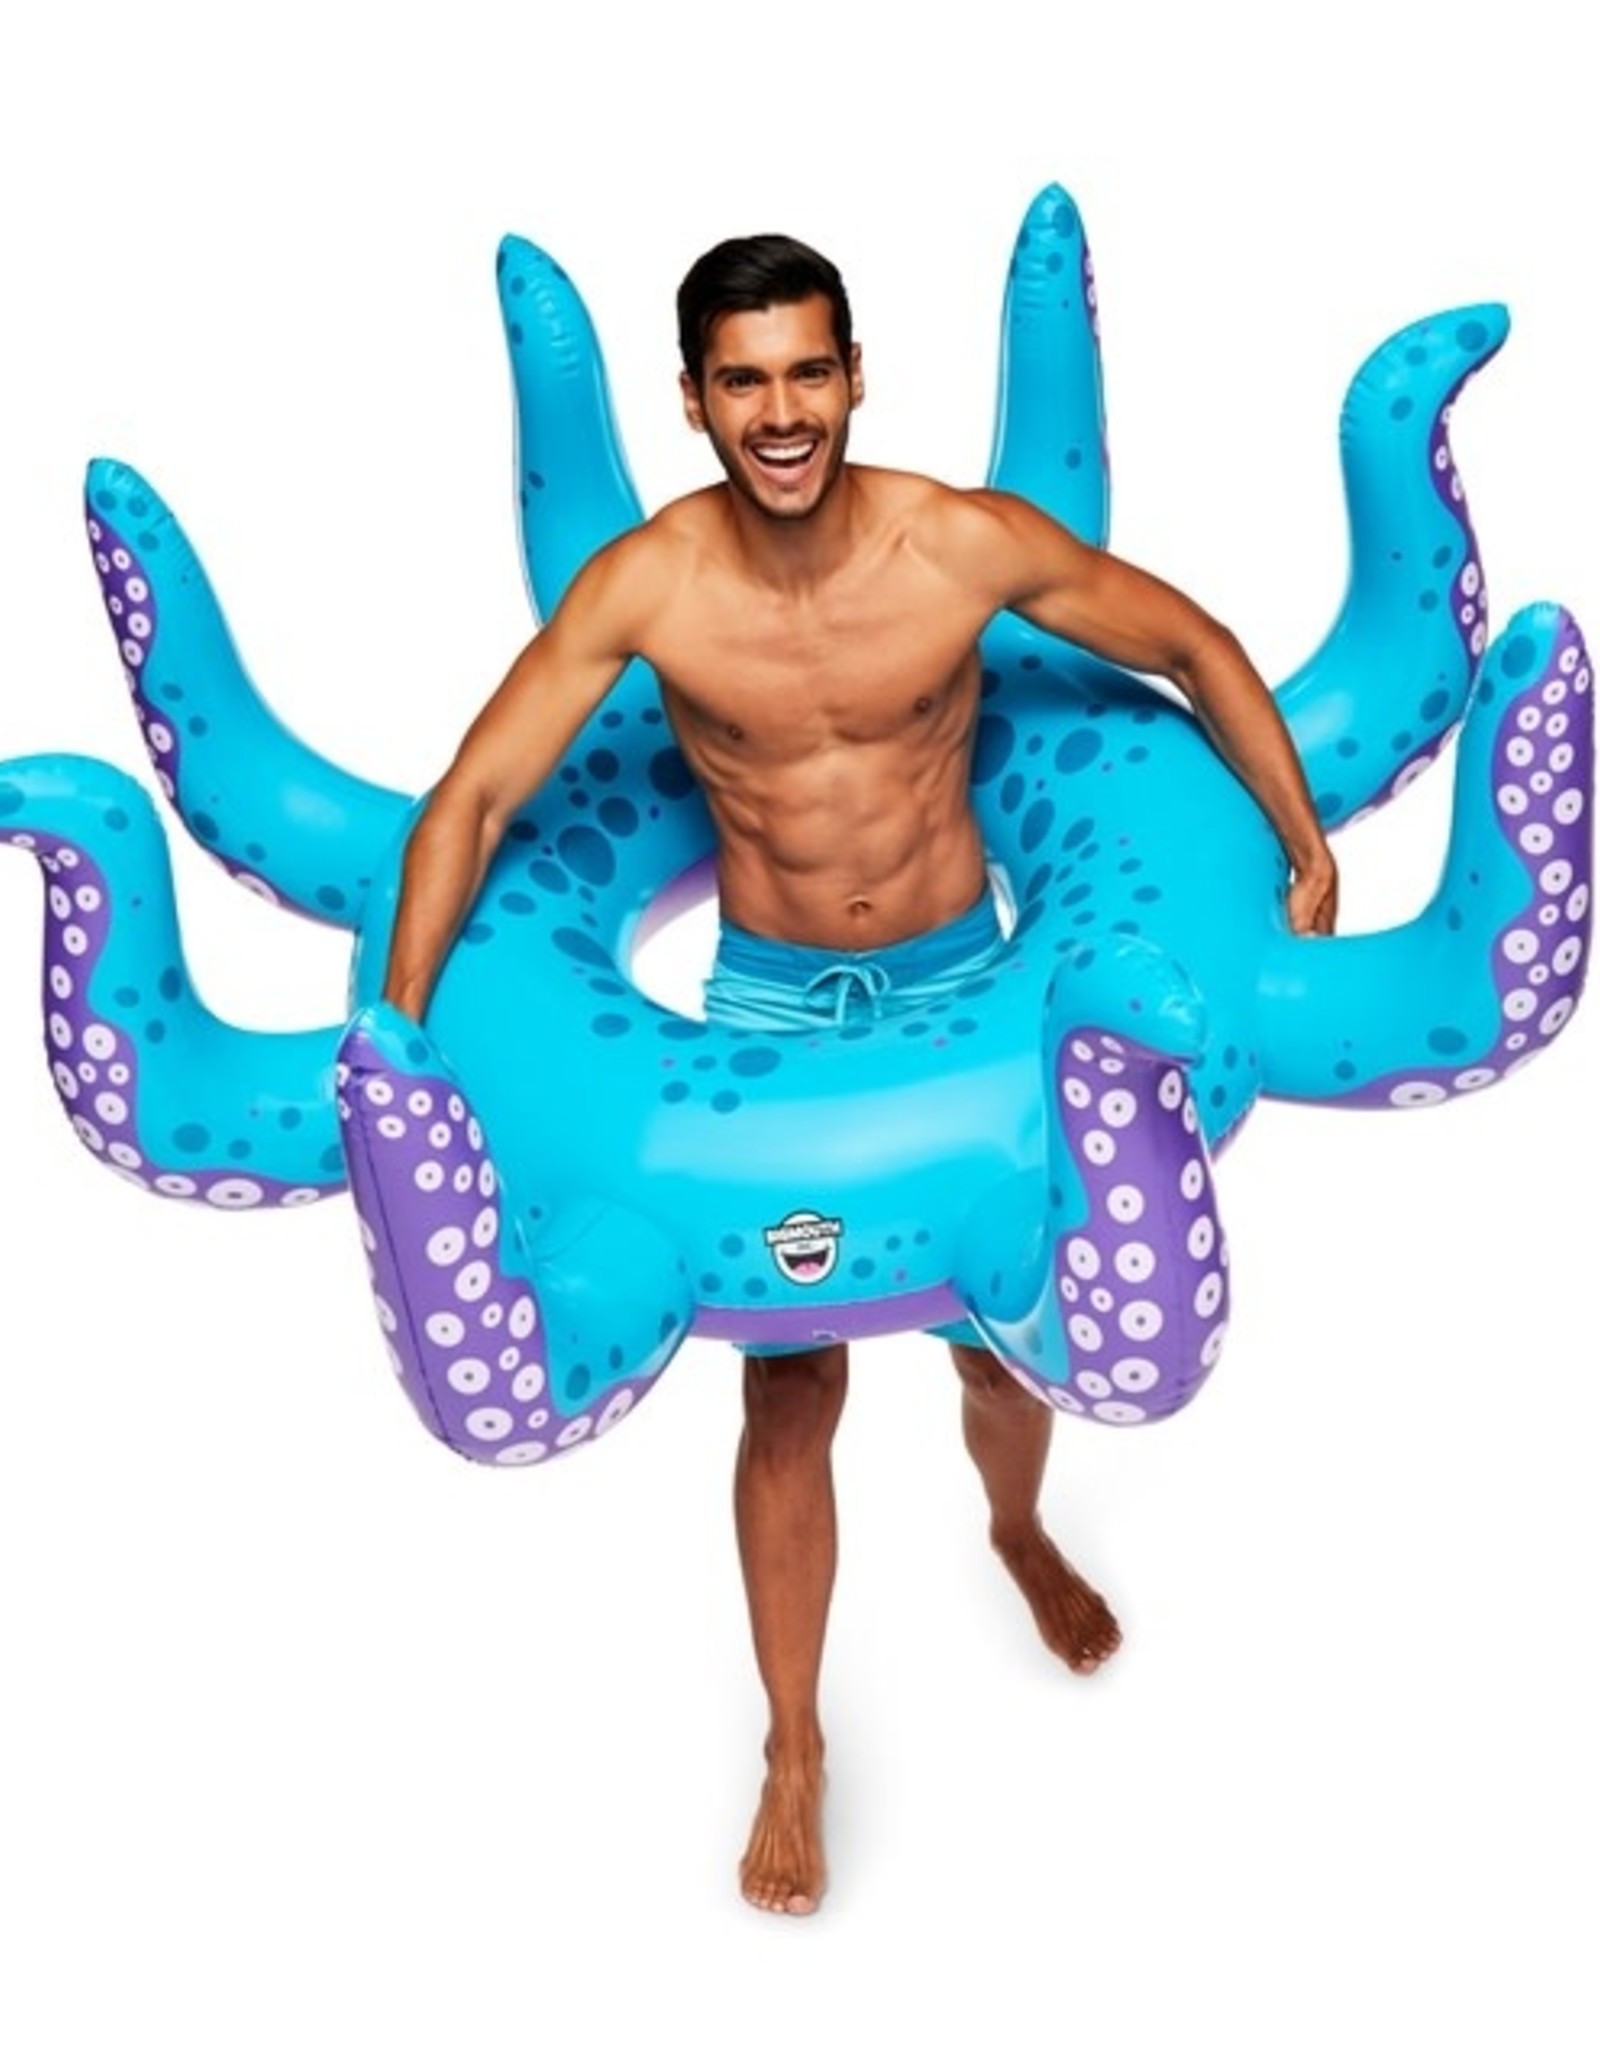 BigMouth XL Octopus Pool Float